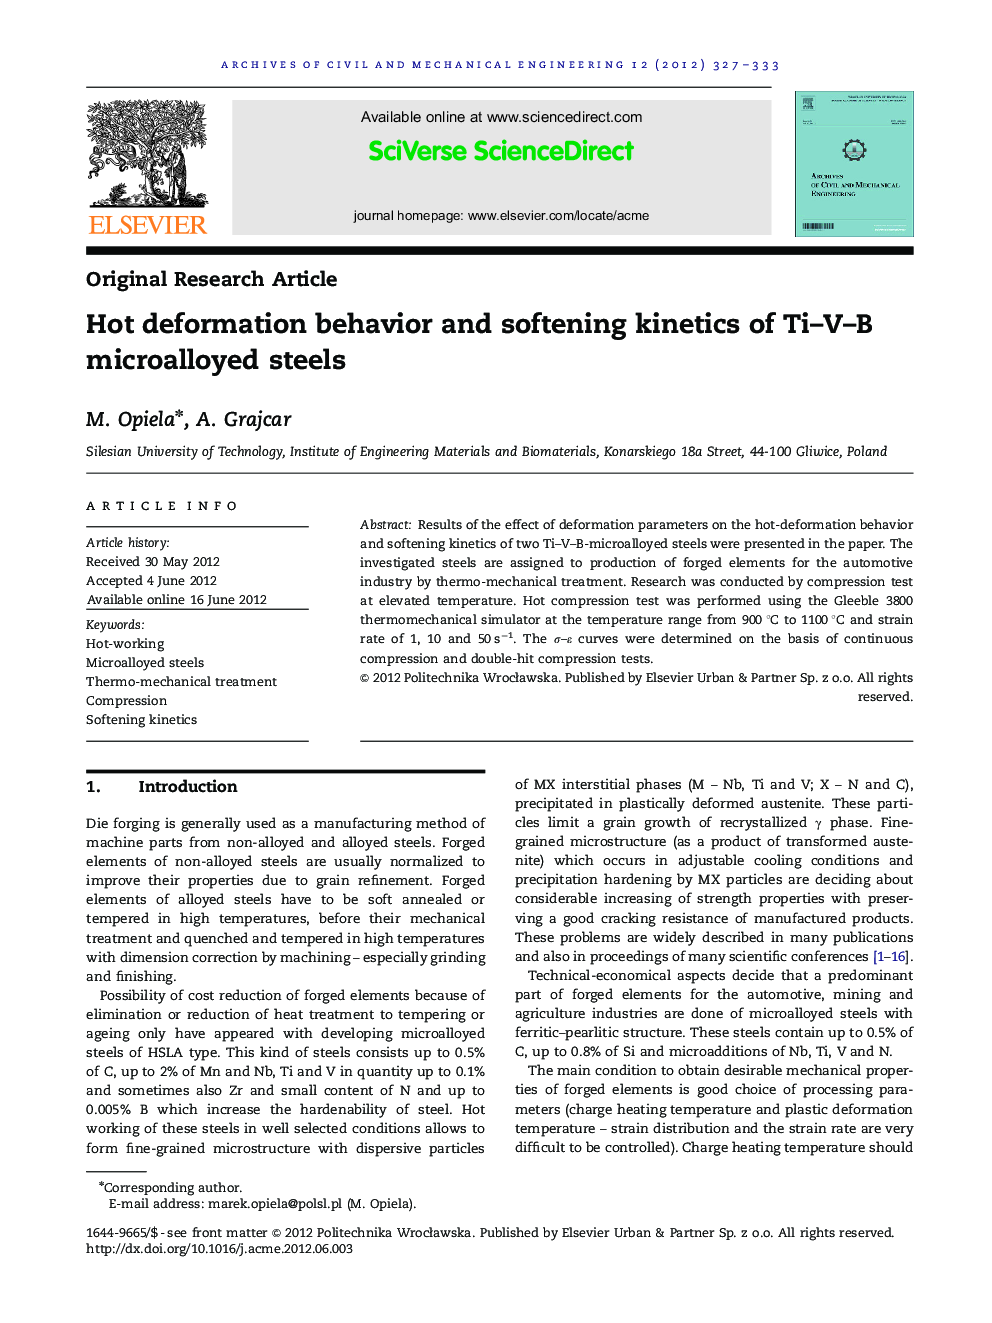 Hot deformation behavior and softening kinetics of Ti–V–B microalloyed steels